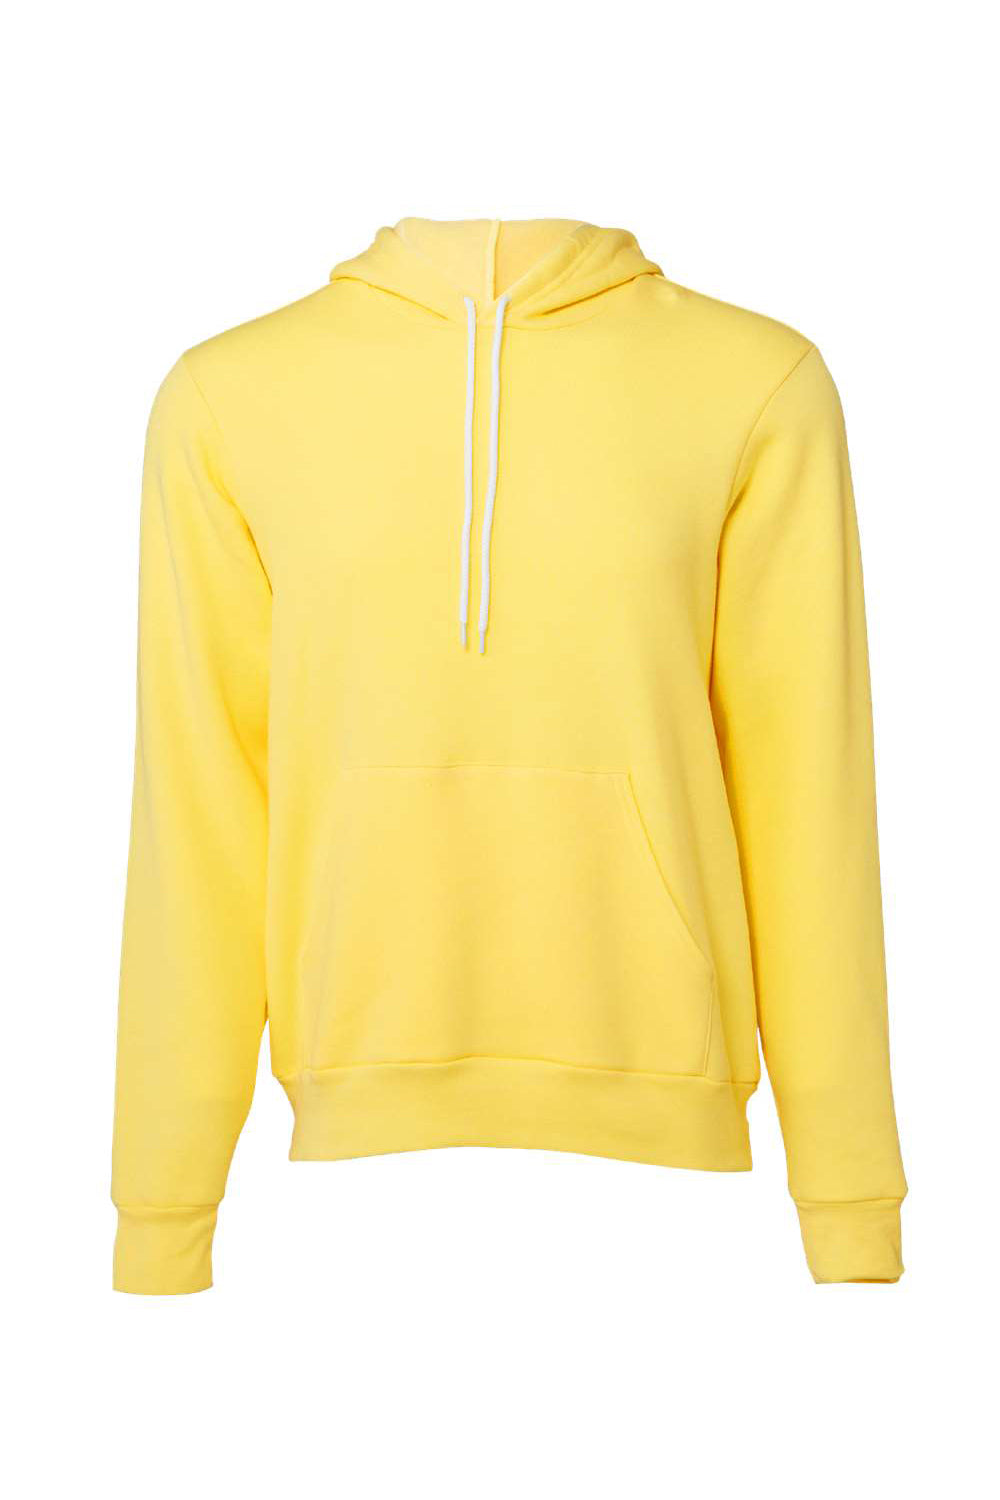 Bella + Canvas BC3719/3719 Mens Sponge Fleece Hooded Sweatshirt Hoodie Yellow Flat Front